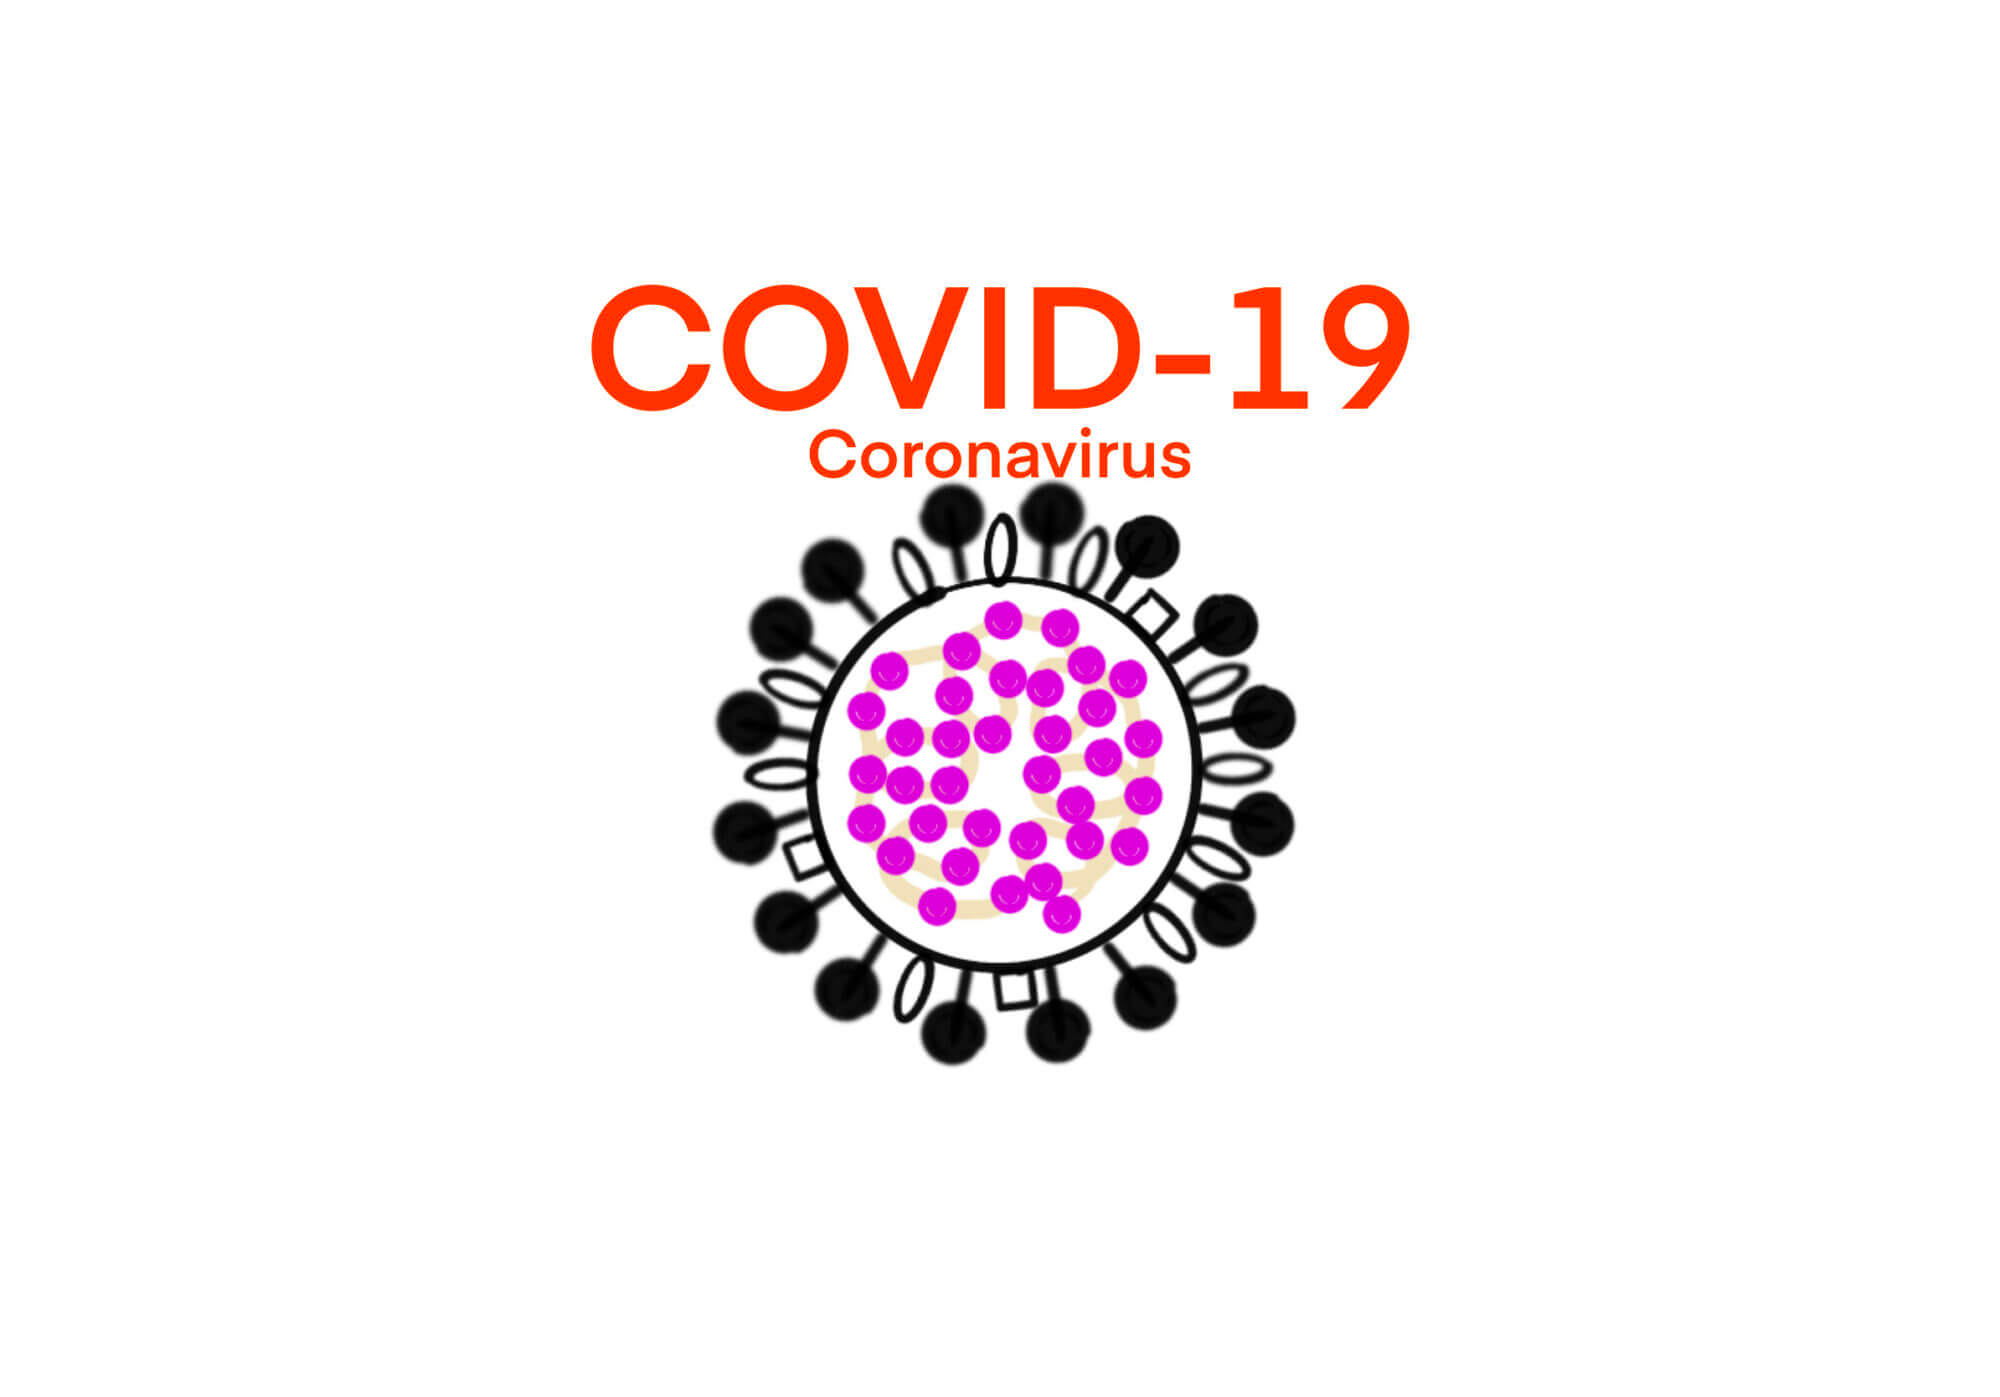 [COVID-19] 飲む治療薬 Molnupiravir (Lagevrio) – EUの当局(EMA)が各国に対して使用に関するアドバイスを発行した [2021/11/19] ID35044